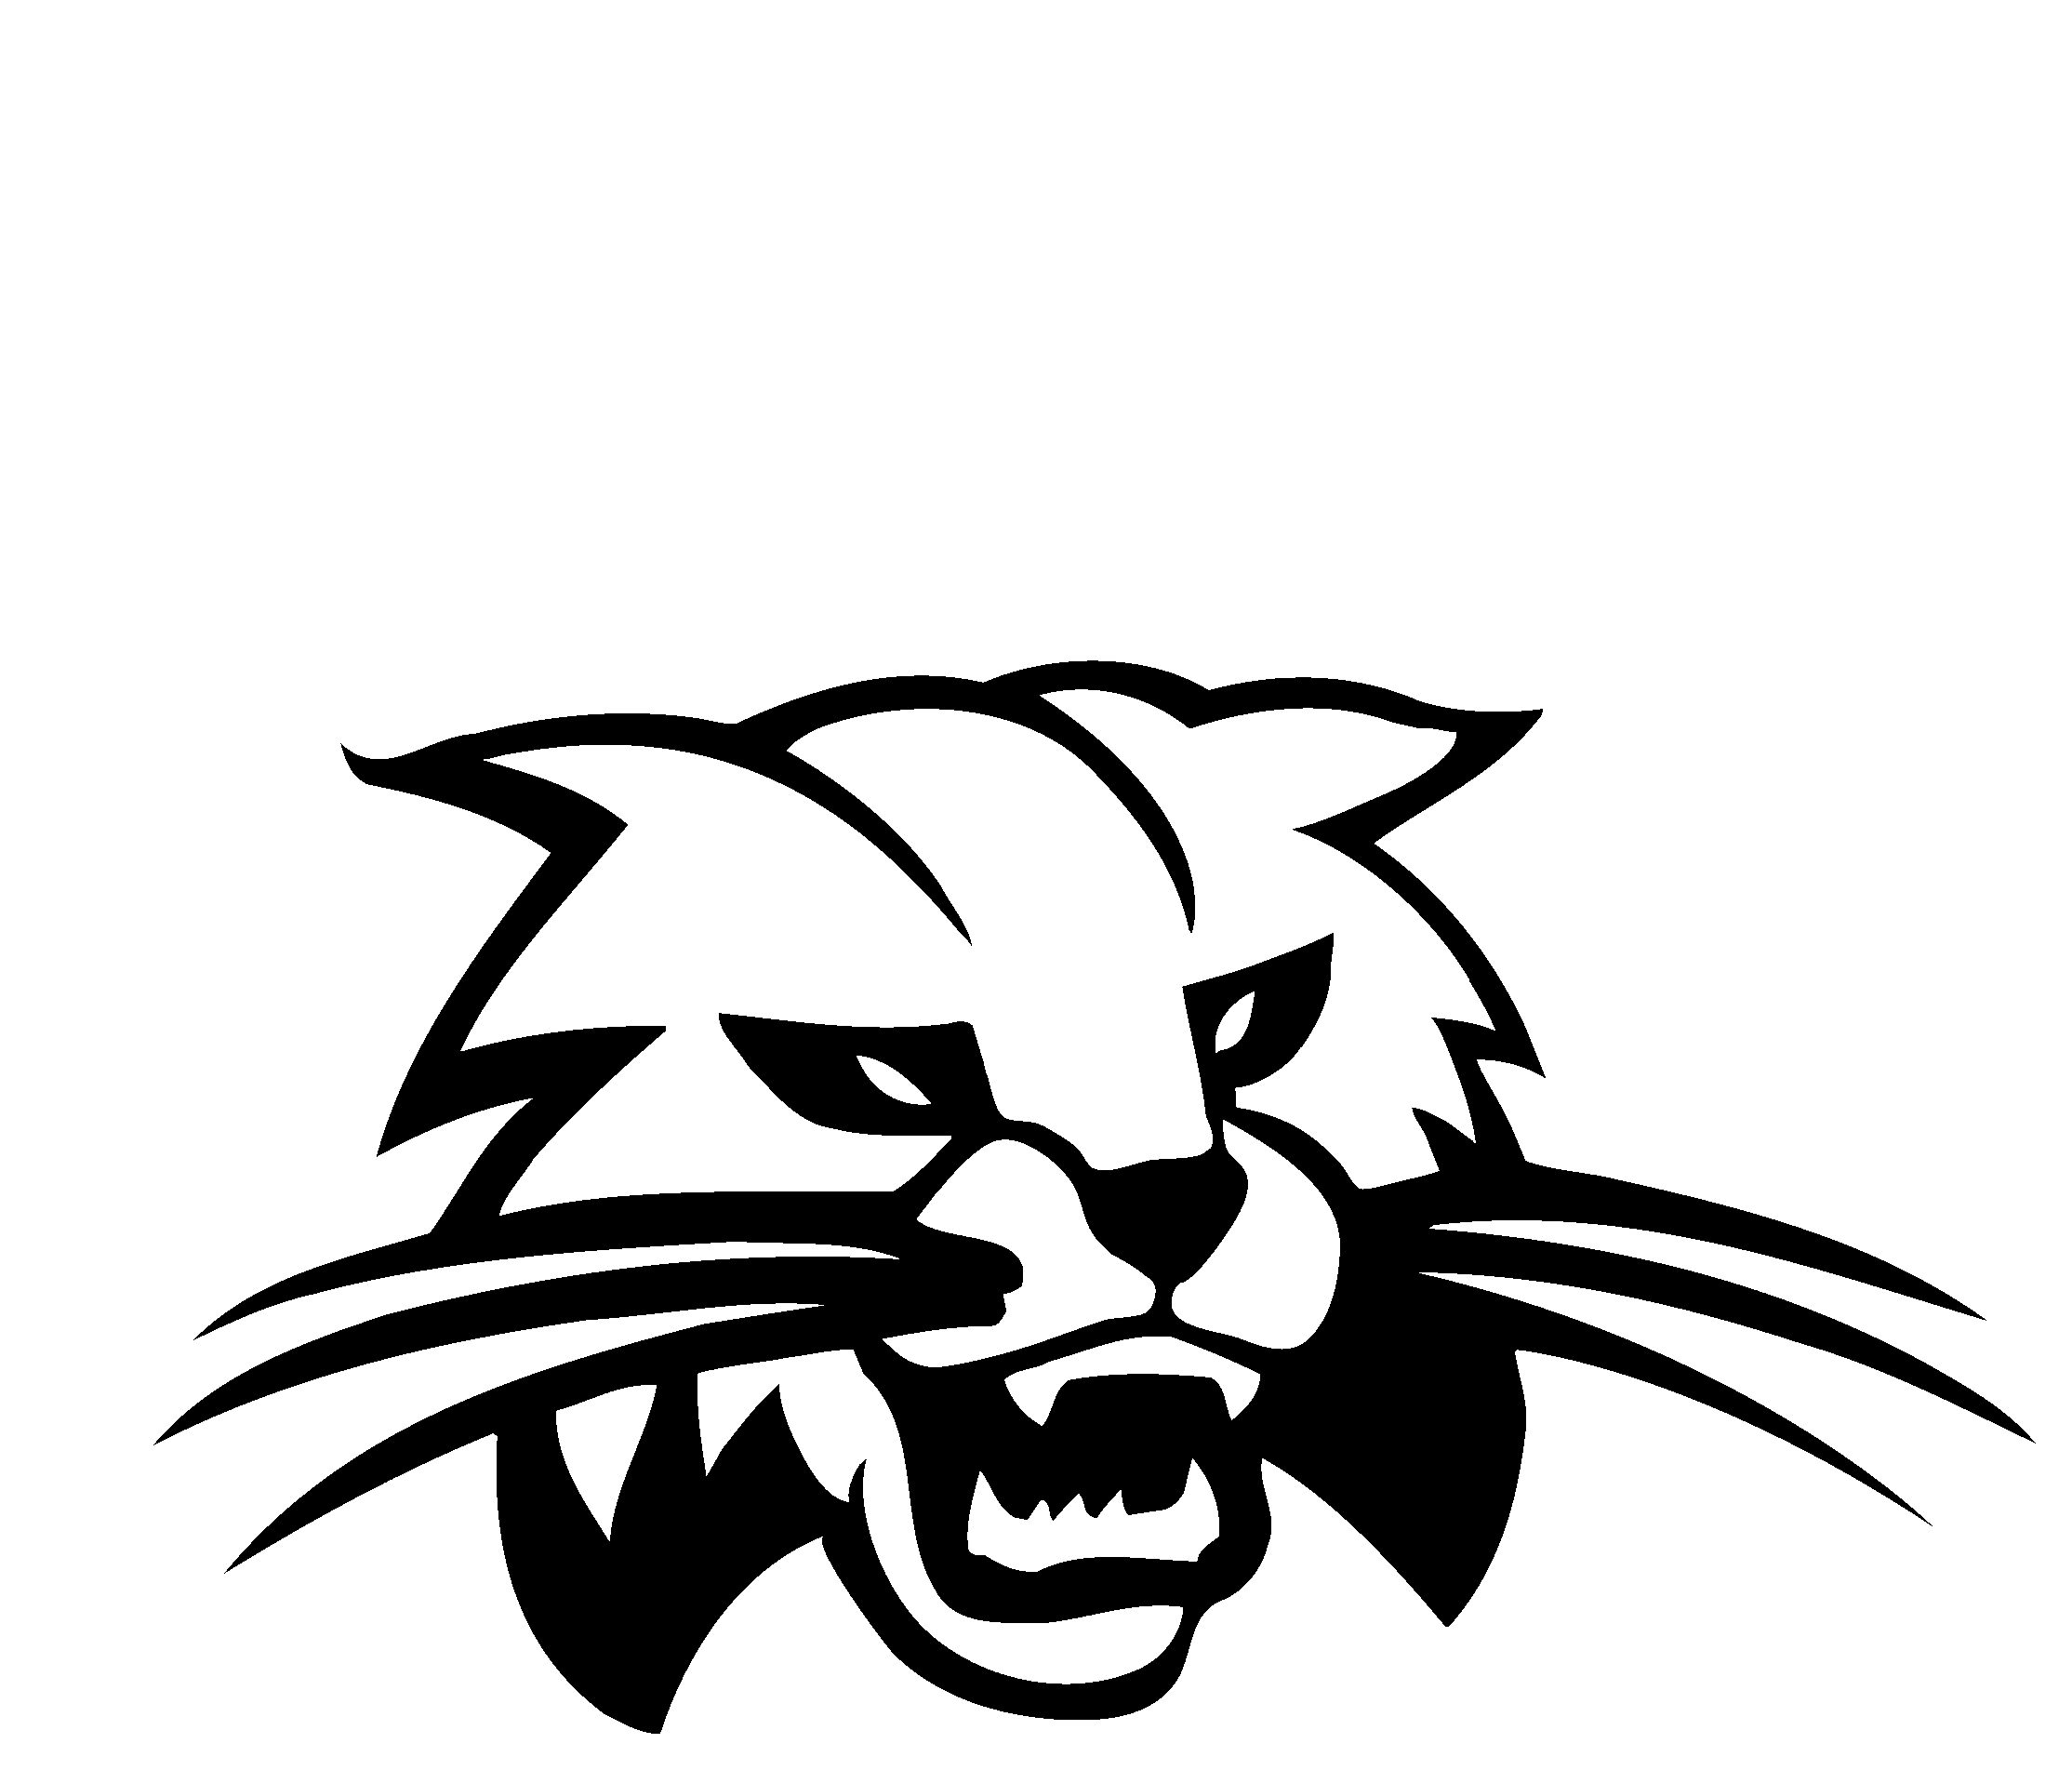 Ohio Bobcats Logo Black And White - Ohio Bobcats (2400x2400)